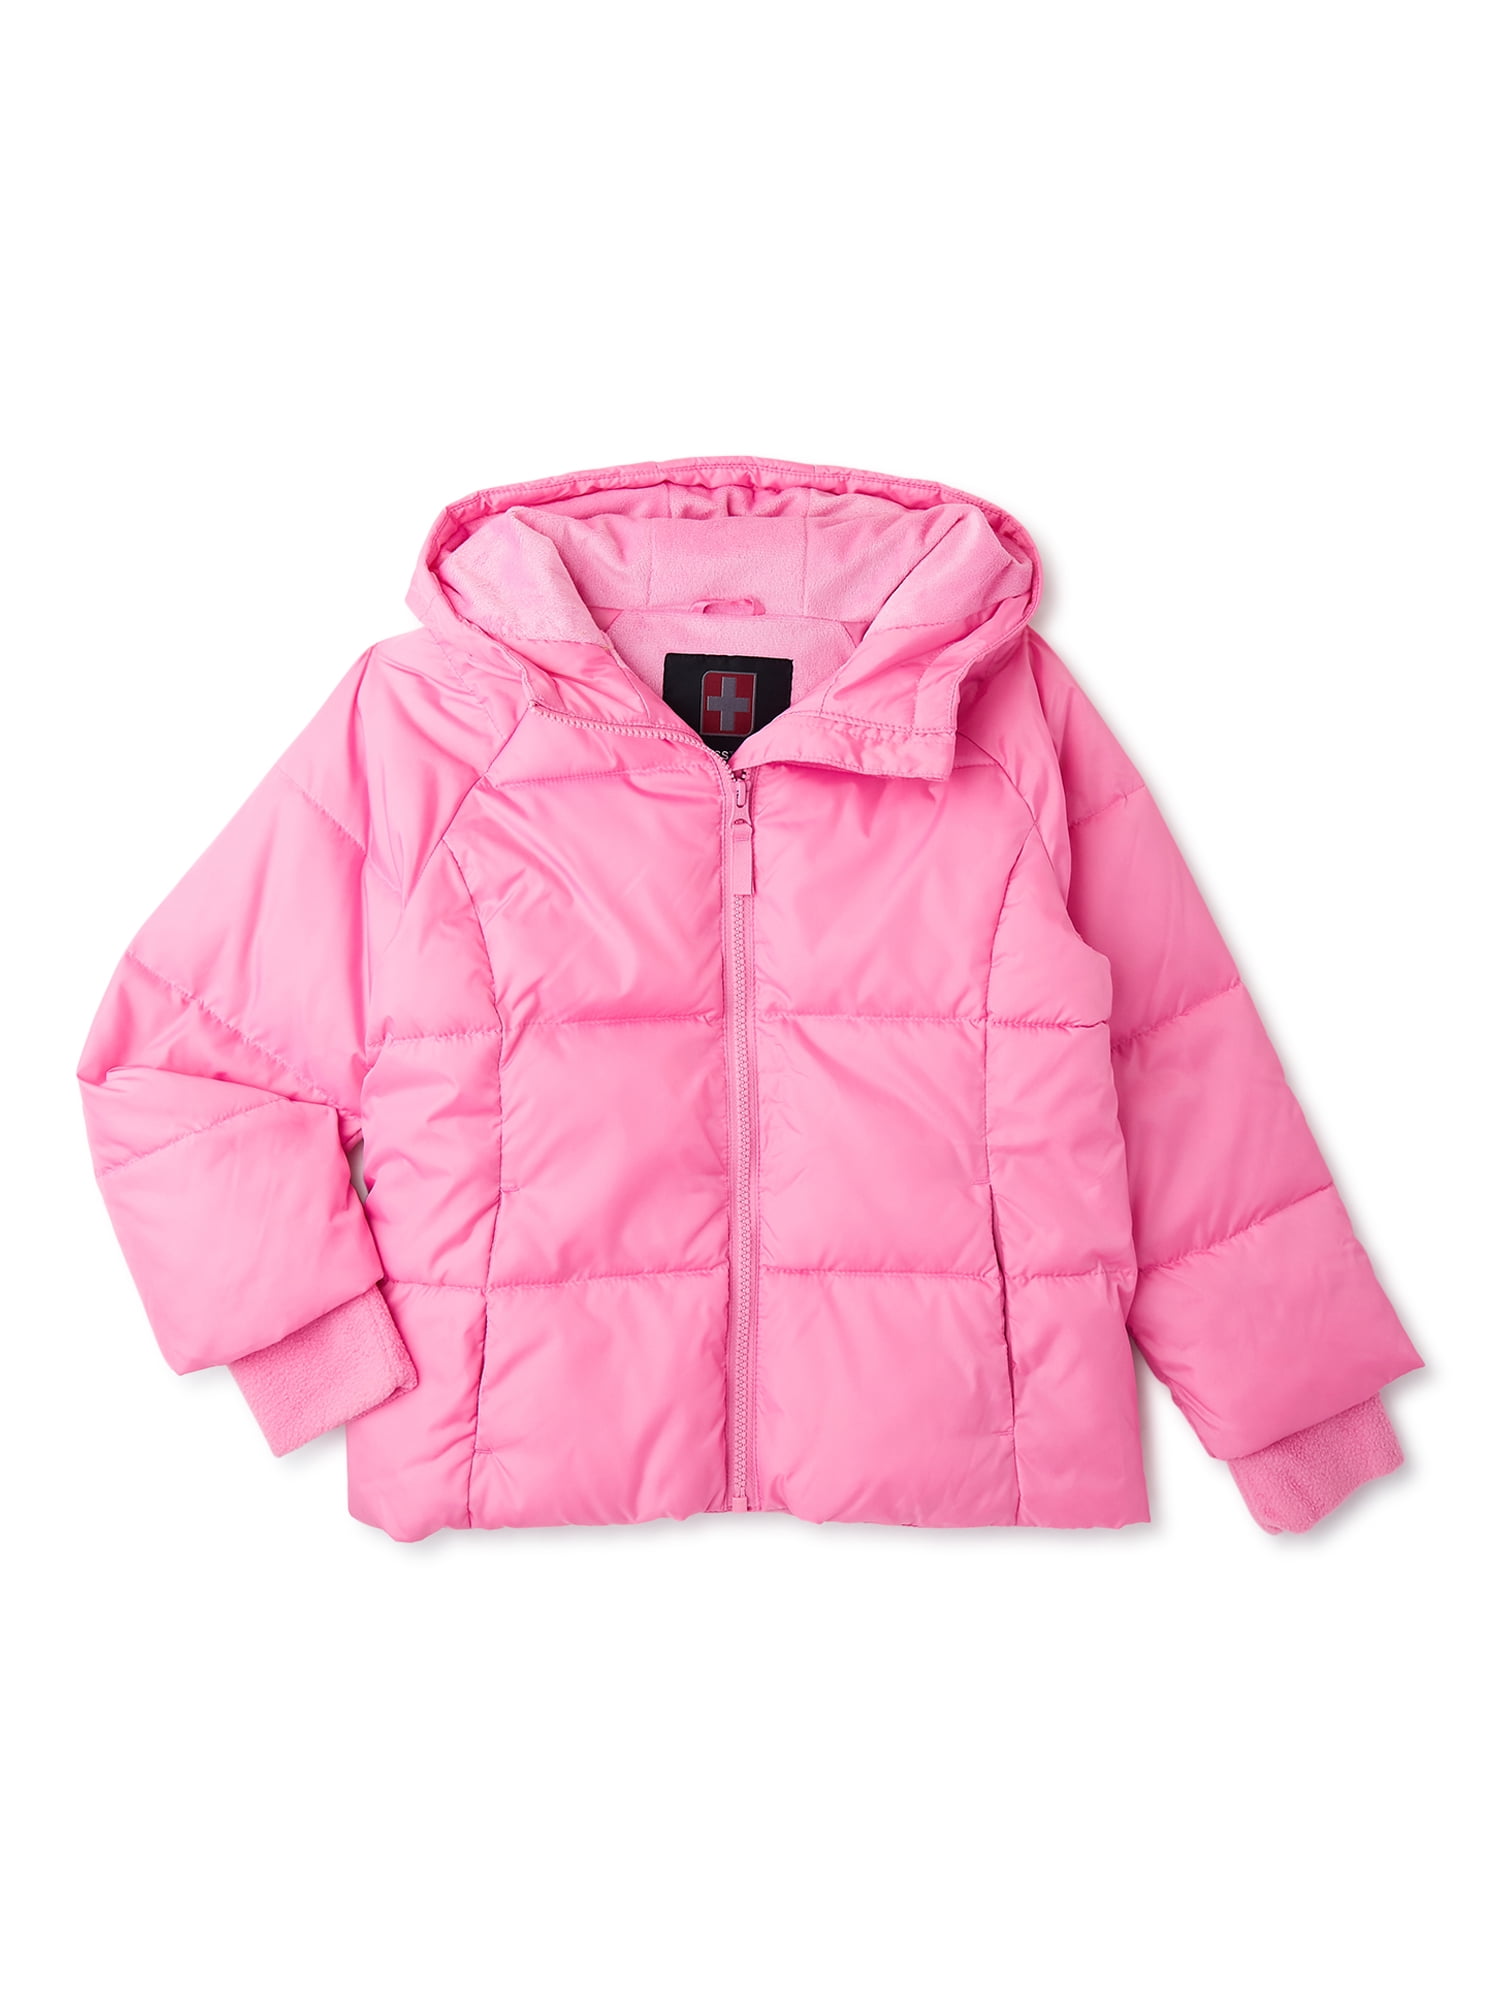 Swiss Tech Girls Winter Puffer Jacket with Hood, Sizes 4-18 & Plus ...